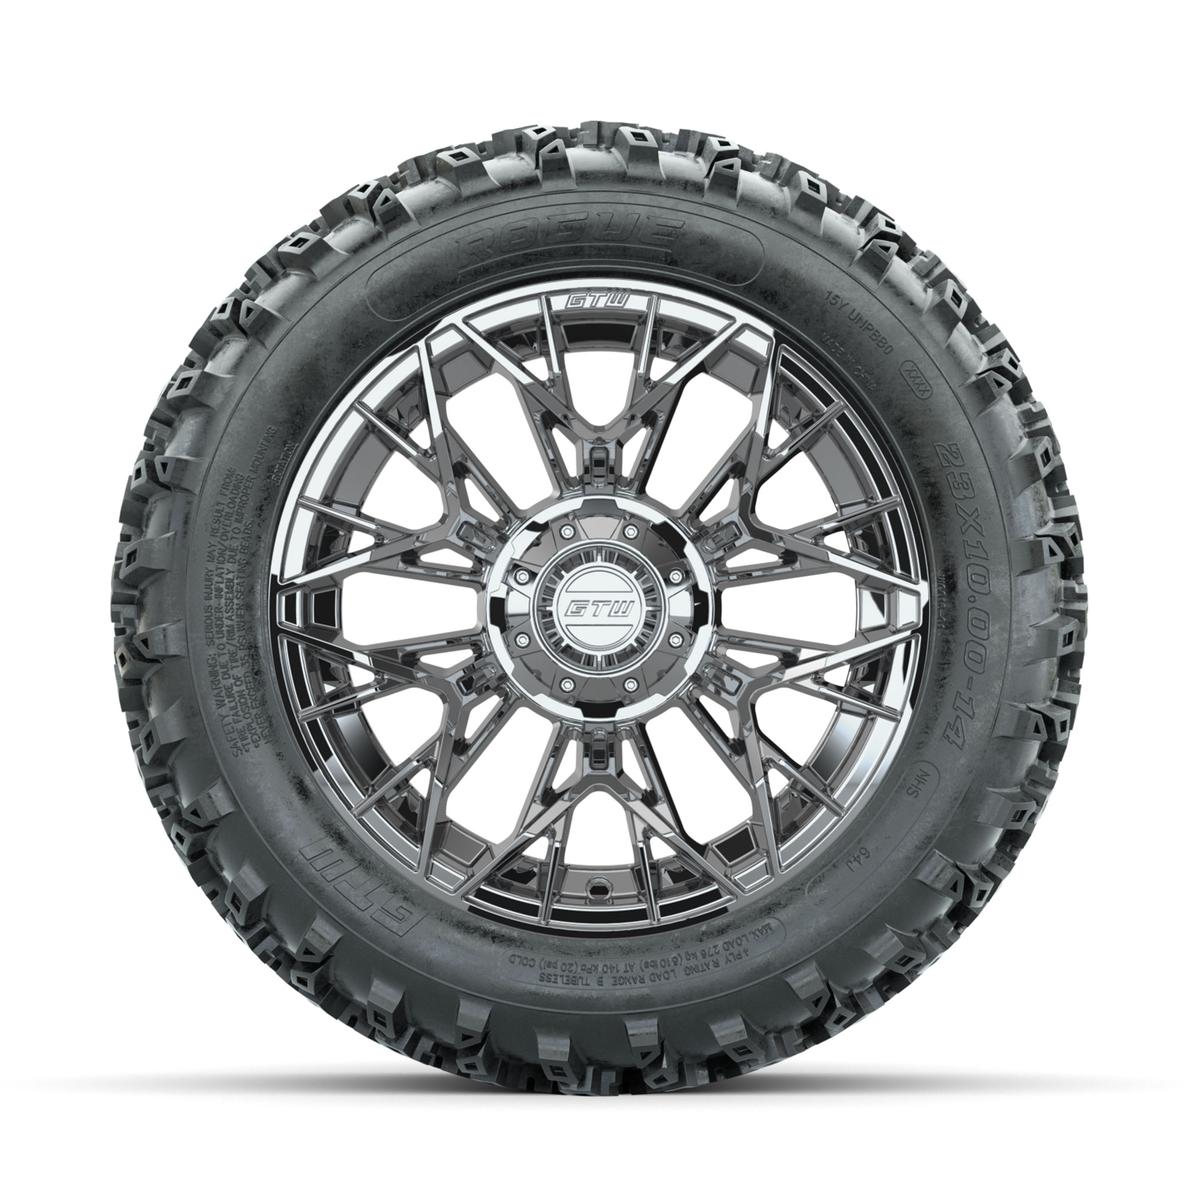 GTW Stellar Chrome 14 in Wheels with 23x10.00-14 Rogue All Terrain Tires – Full Set